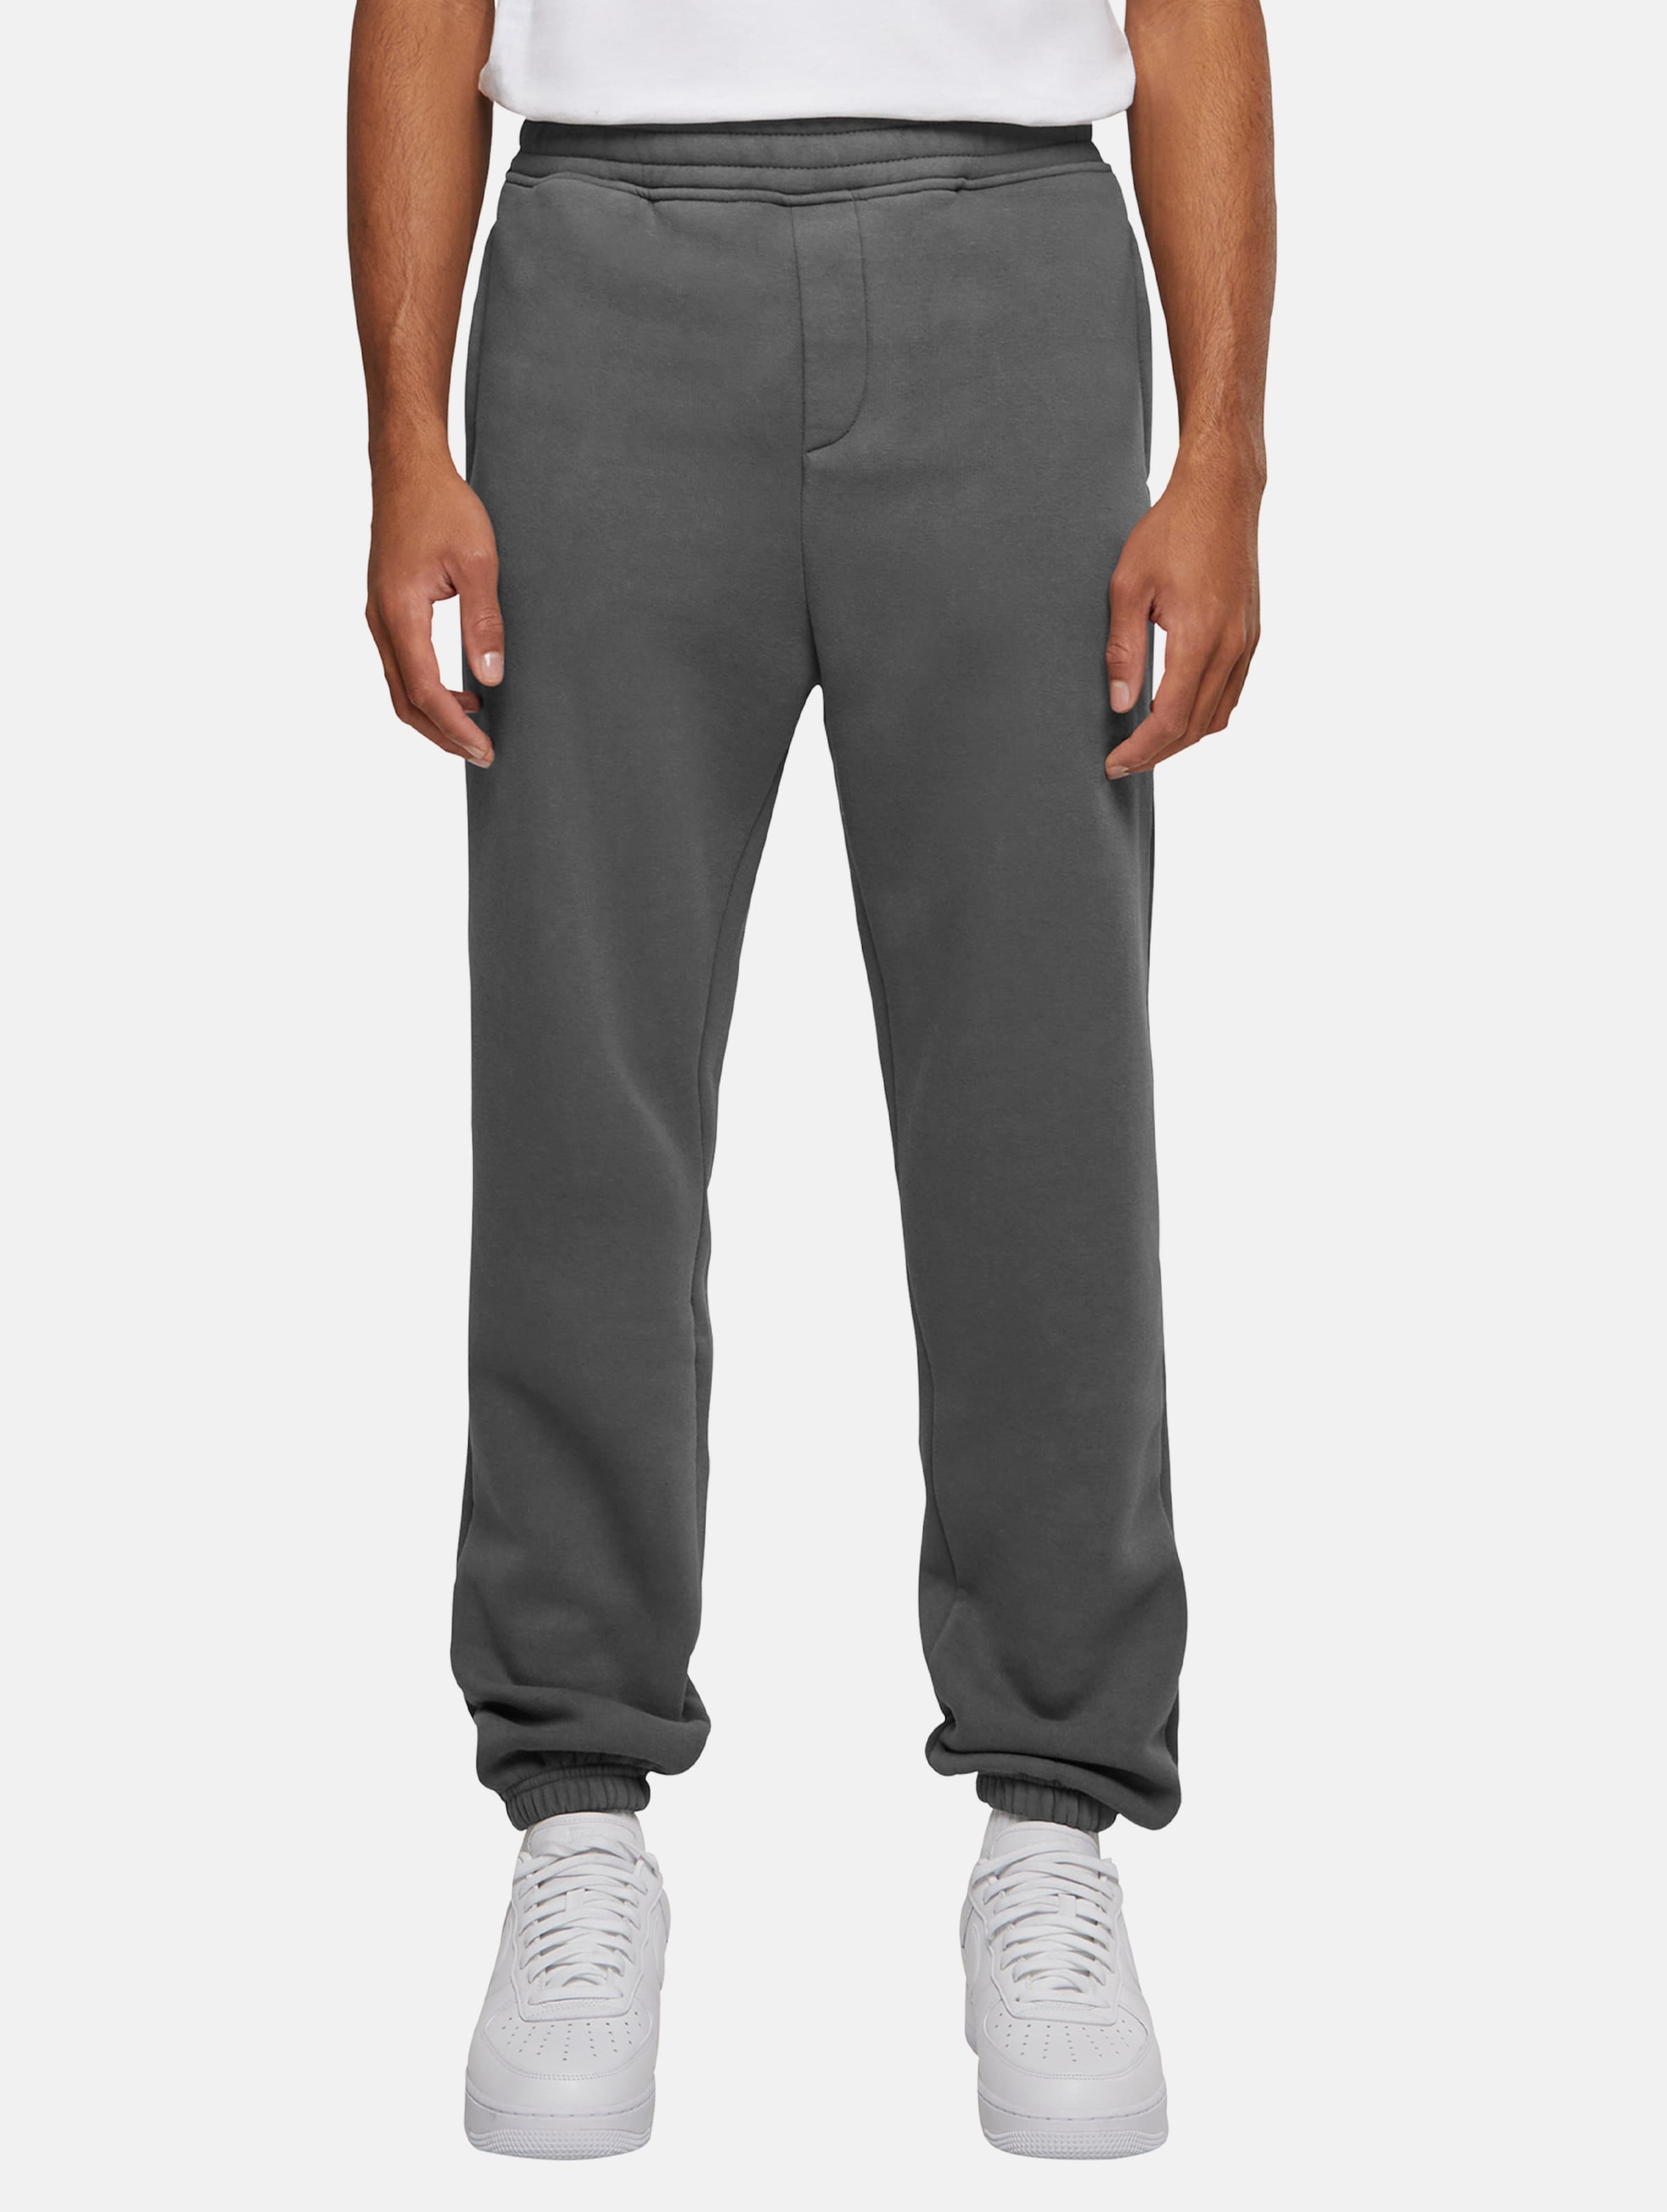 Prohibited Jogginghosen Männer,Unisex op kleur grijs, Maat XL